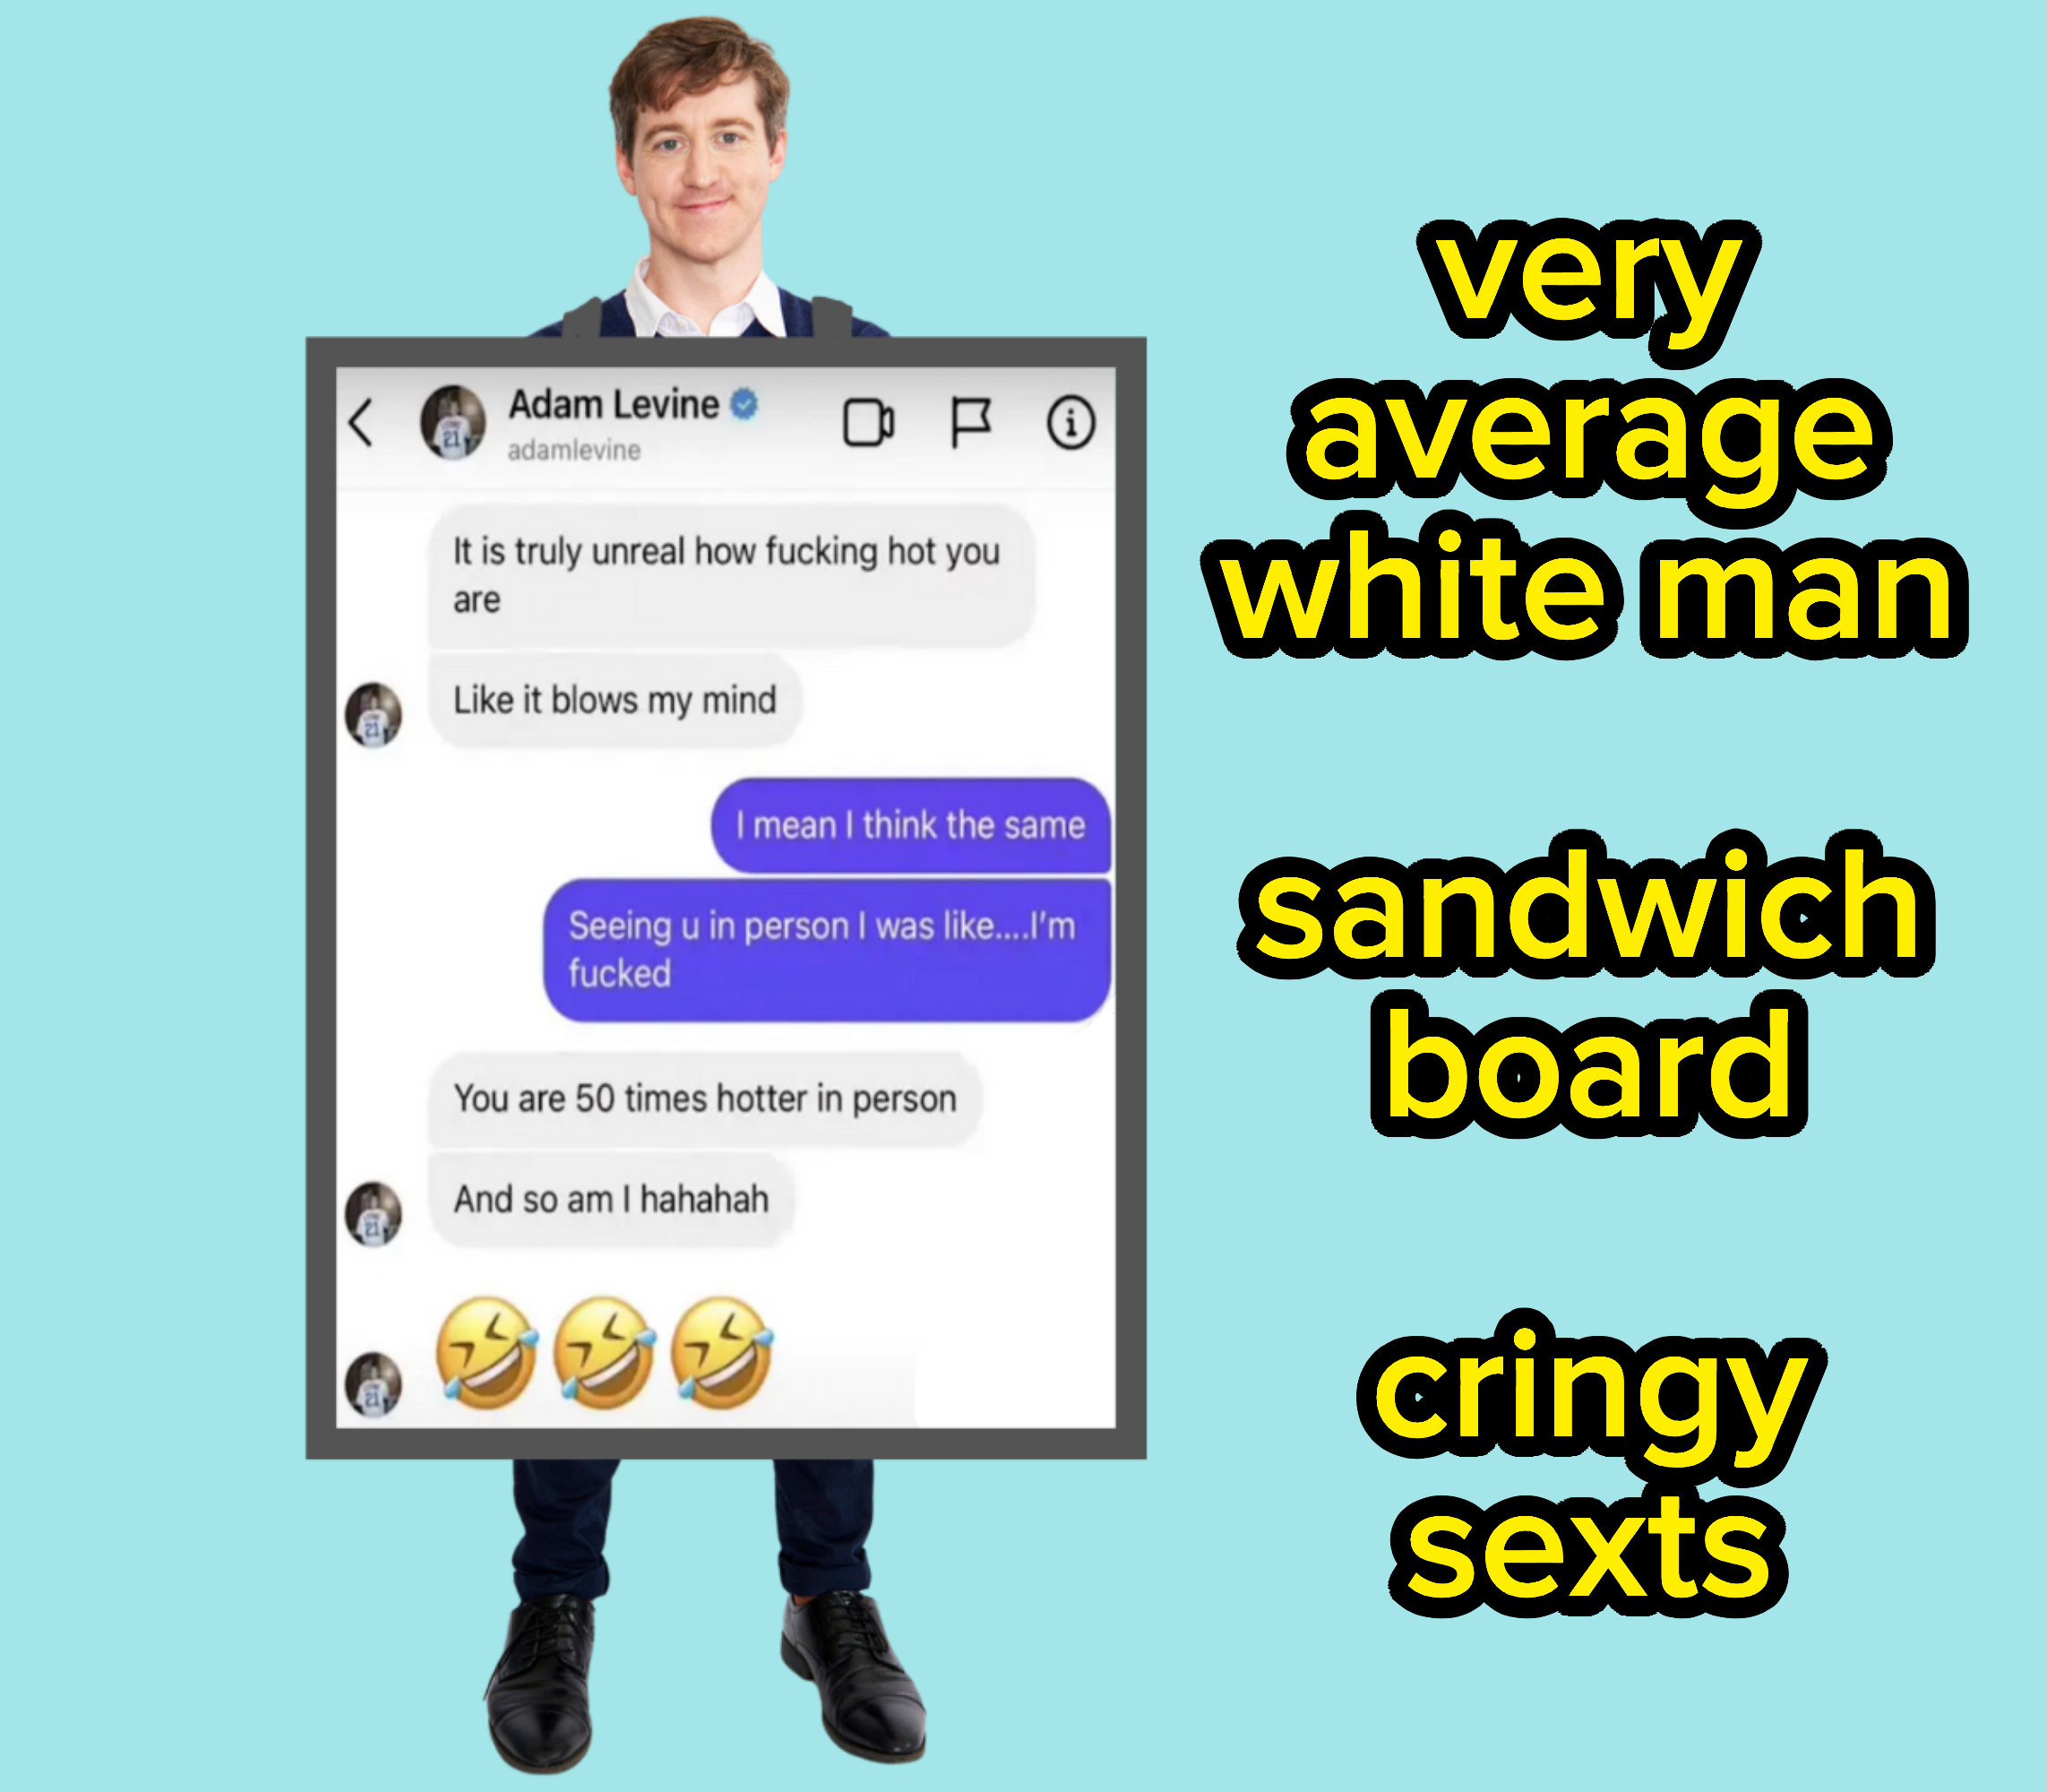 very average white man, sandwich board, cringy sexts